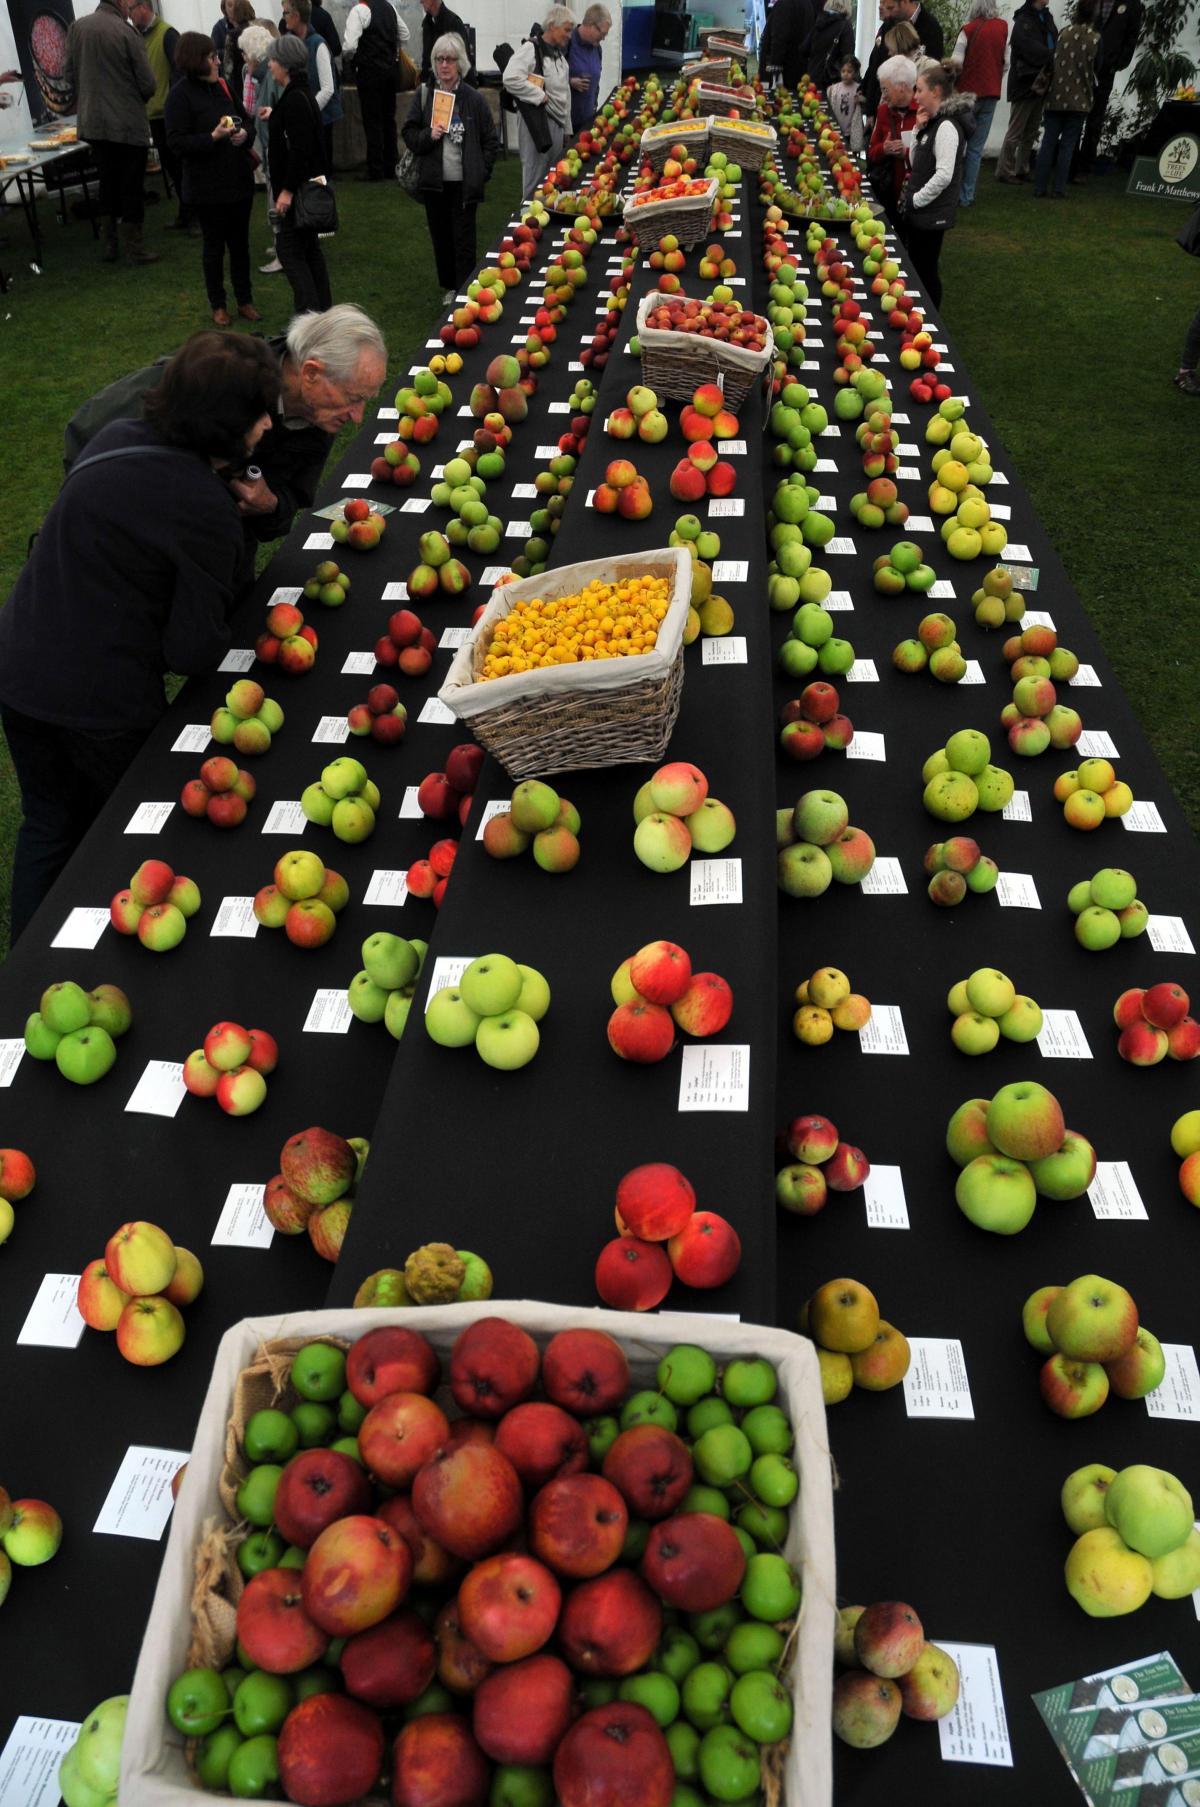 Hundreds of varieties of apples were on display